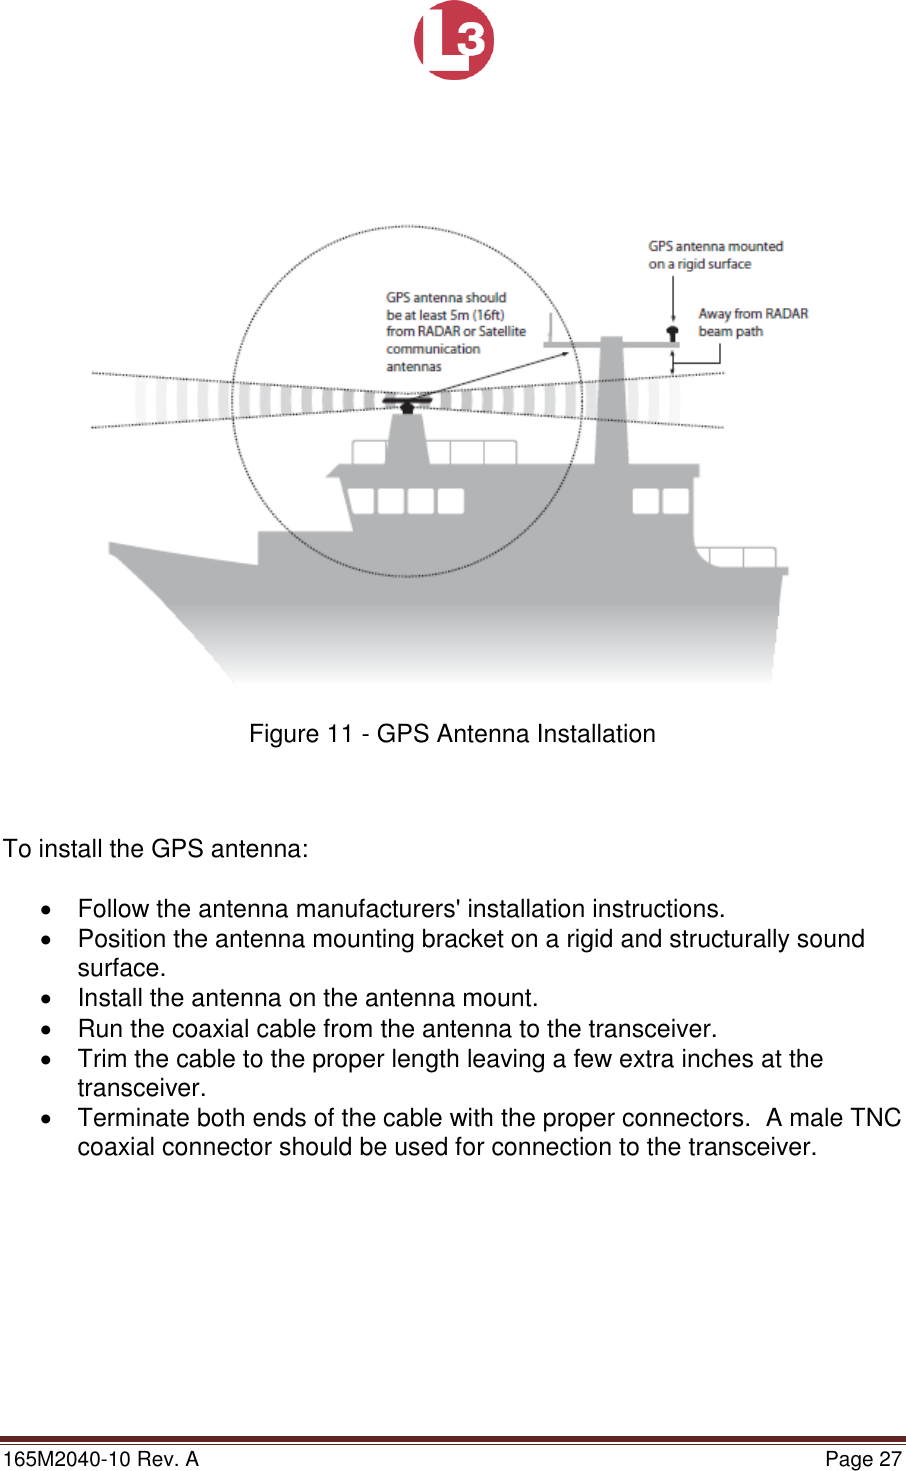 Page 27 of L3 Technologies AISA6 Shipboard Mobile AIS User Manual Memory Verification Procedure